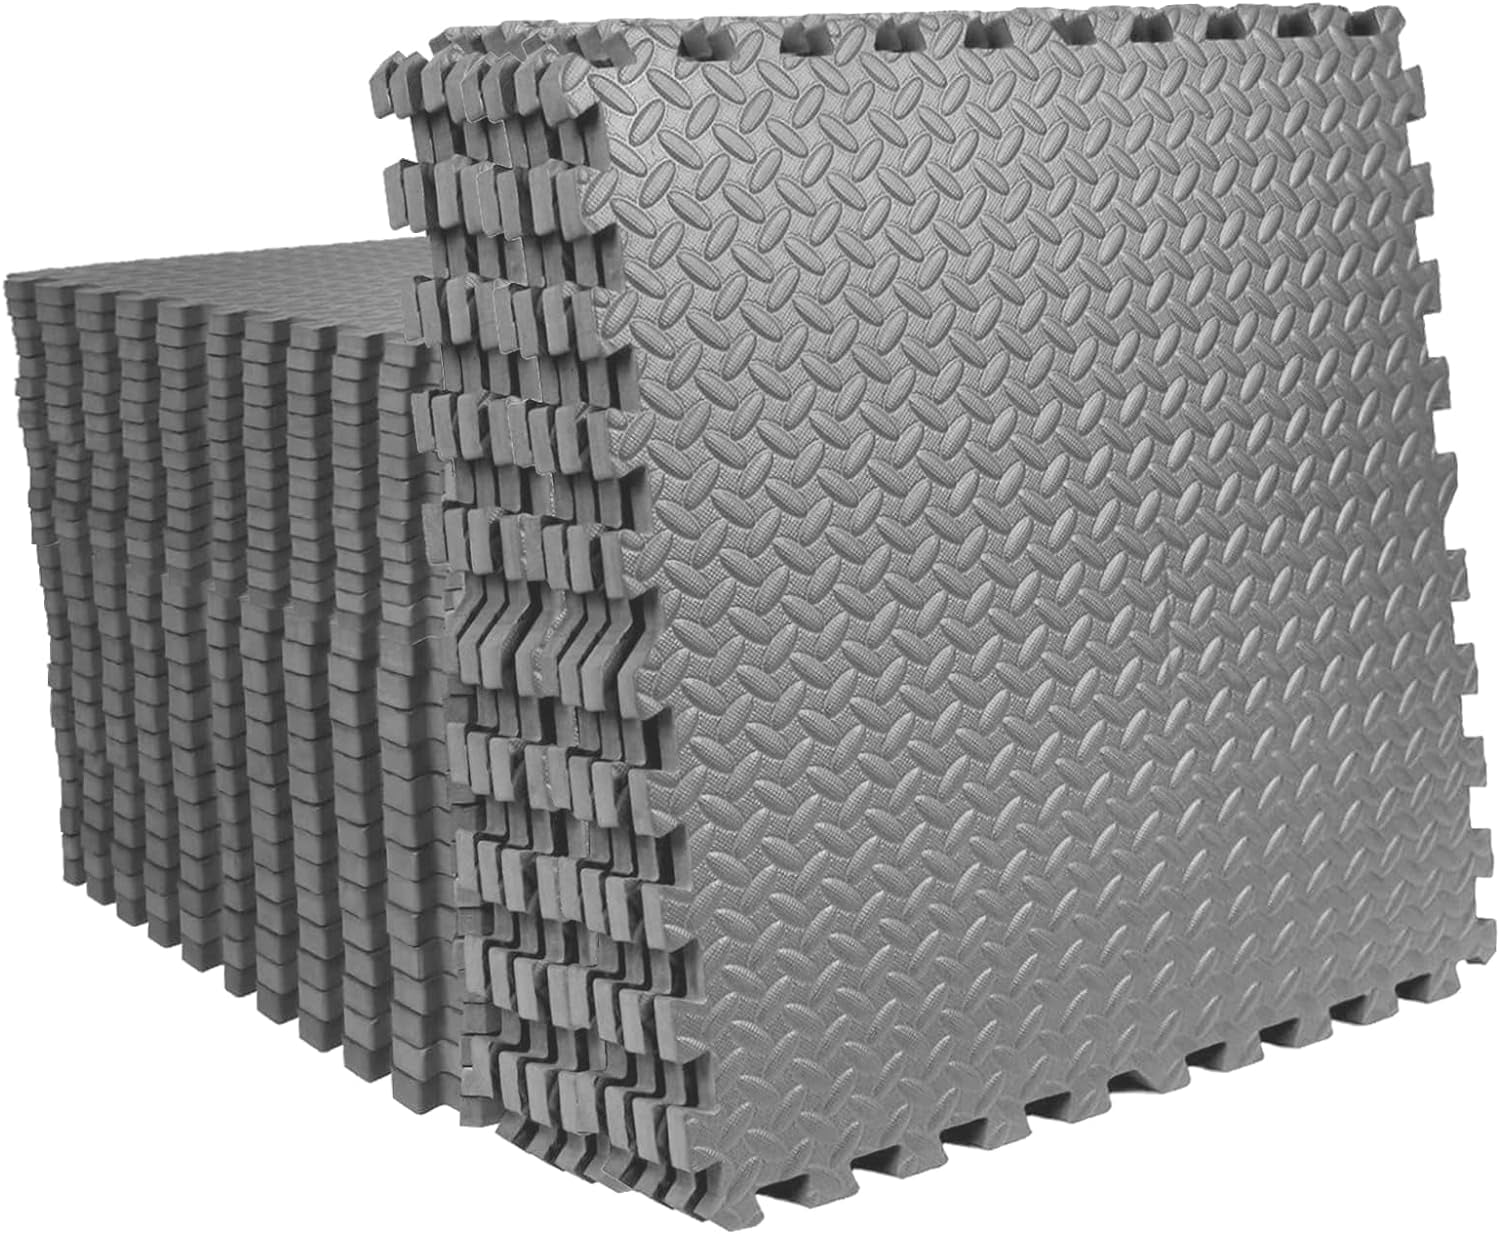 EVA Exercise Floor Mats: Interlocking Foam Tile Performance Mats - 6 Tiles (Area: 24 SQ FT) 1/2 Inch Thickness, EVA Home Gym Exercise Floor Mats for All Exercises or Equipment, Black